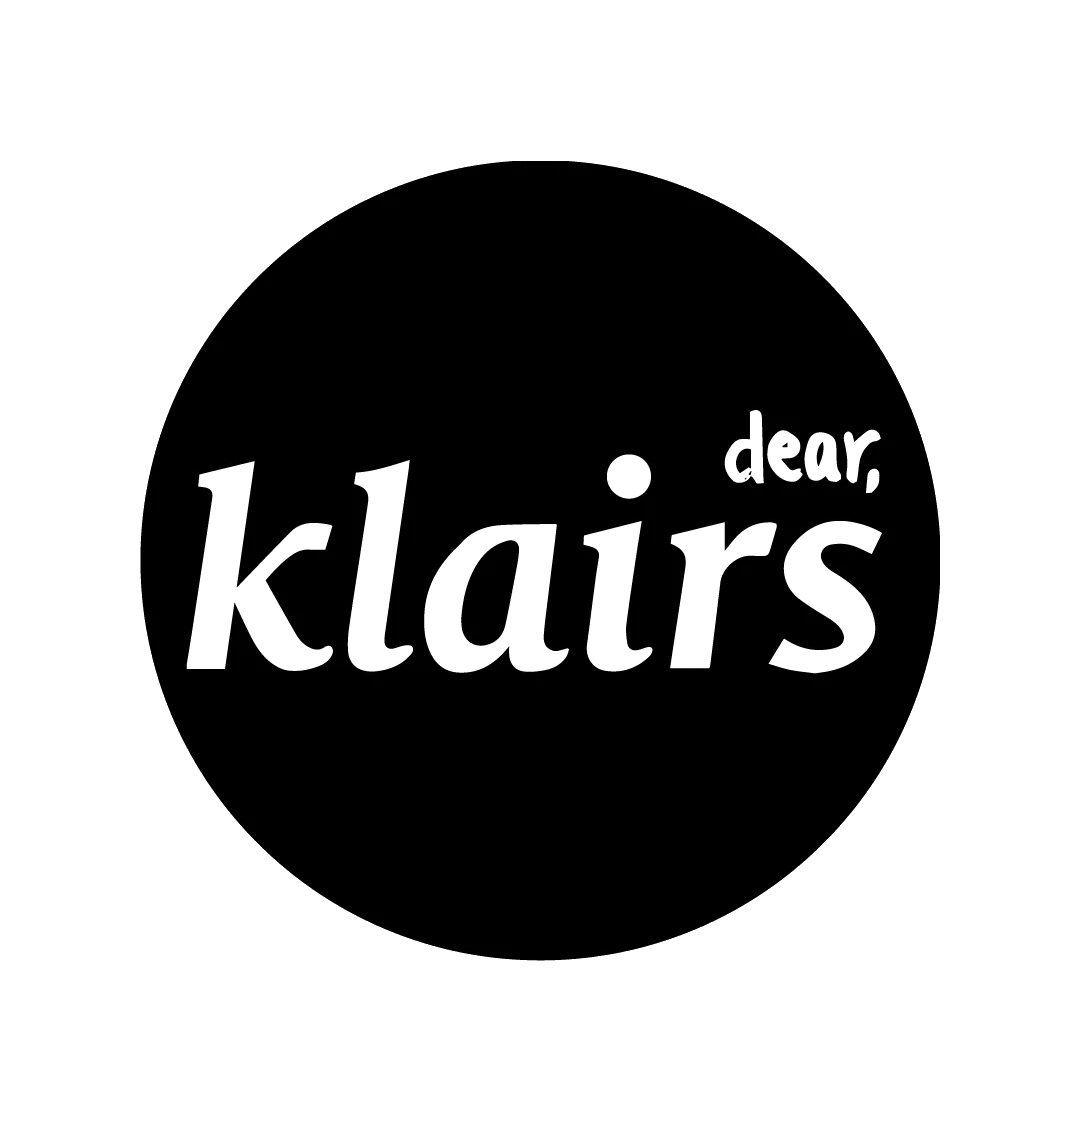 Dear, Klairs 